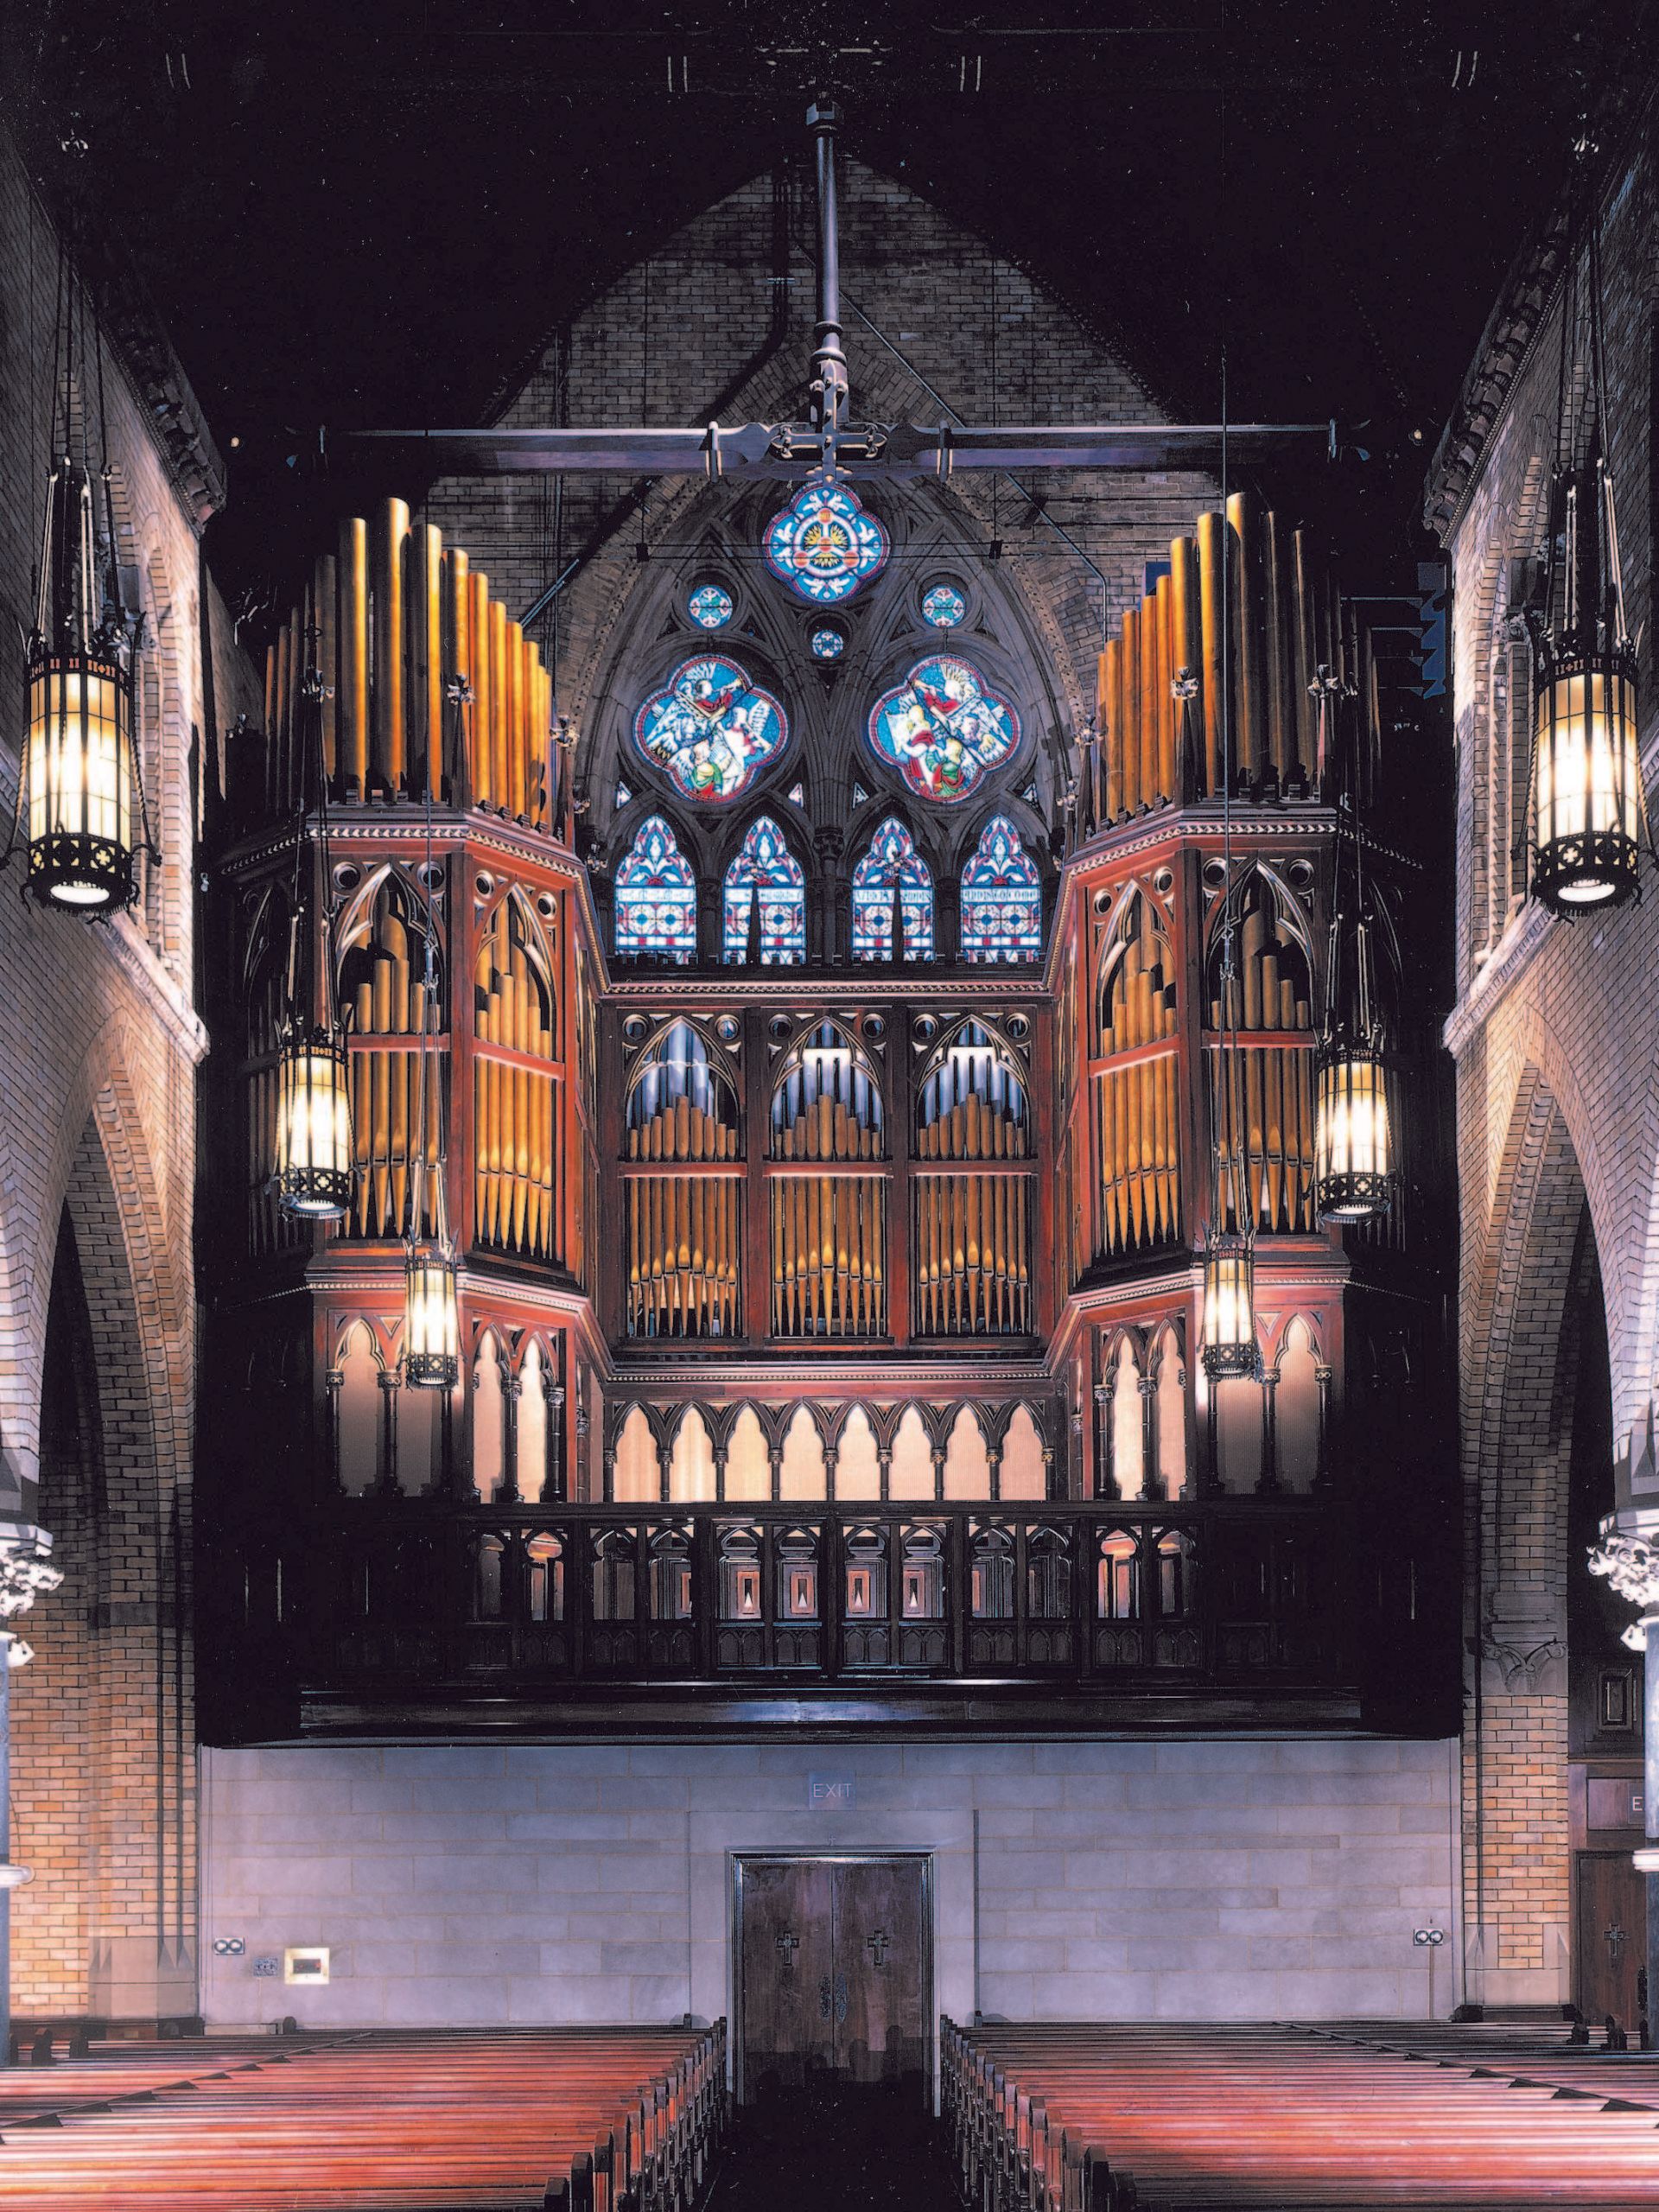 Beautiful pipe organ work